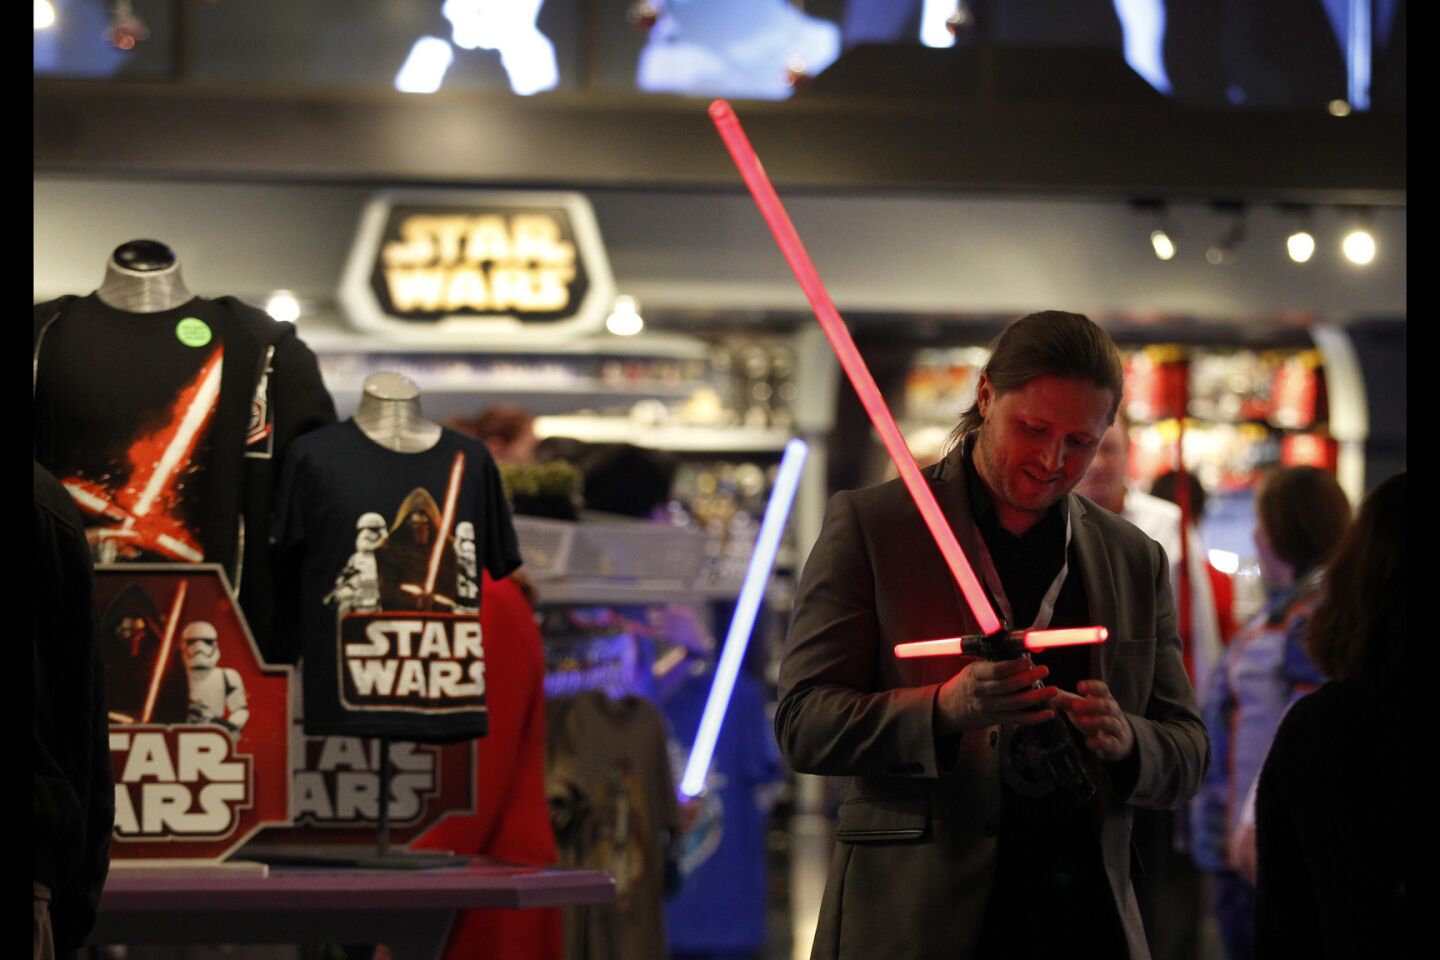 'Season of The Force' arrives at Disneyland